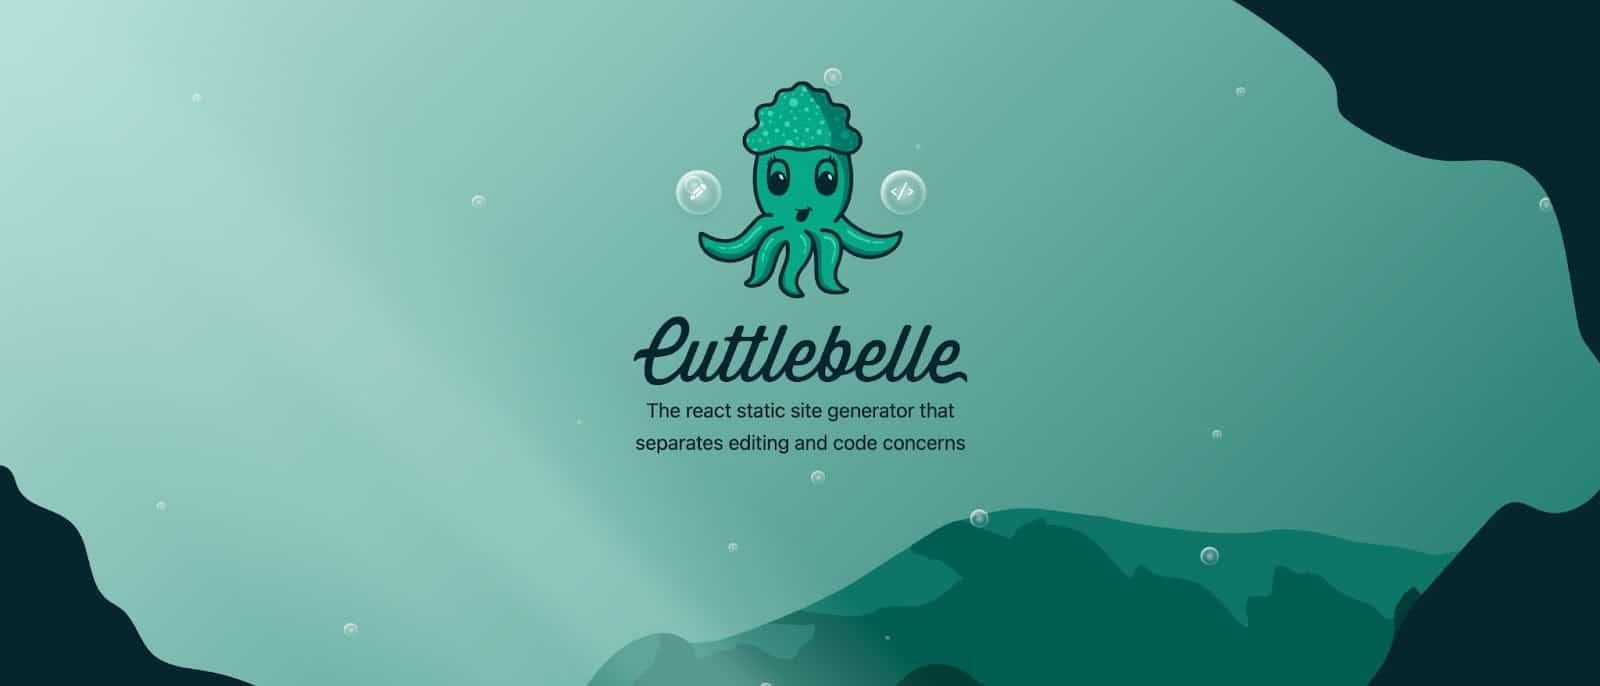 Cuttlebelle 웹사이트 홈페이지